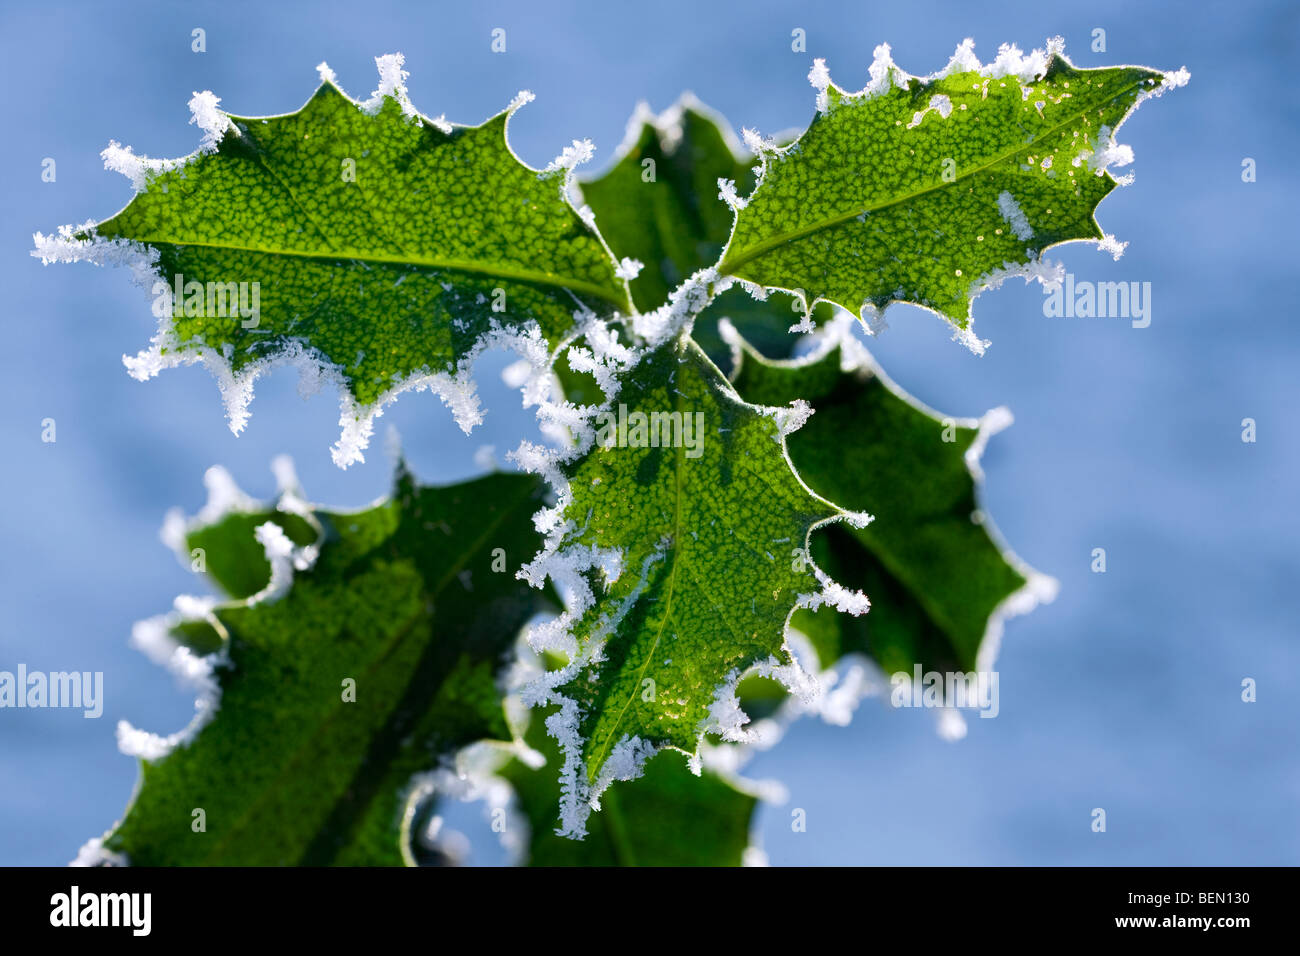 Holly leaves (Ilex aquifolium) covered in hoar frost in winter, Belgium Stock Photo